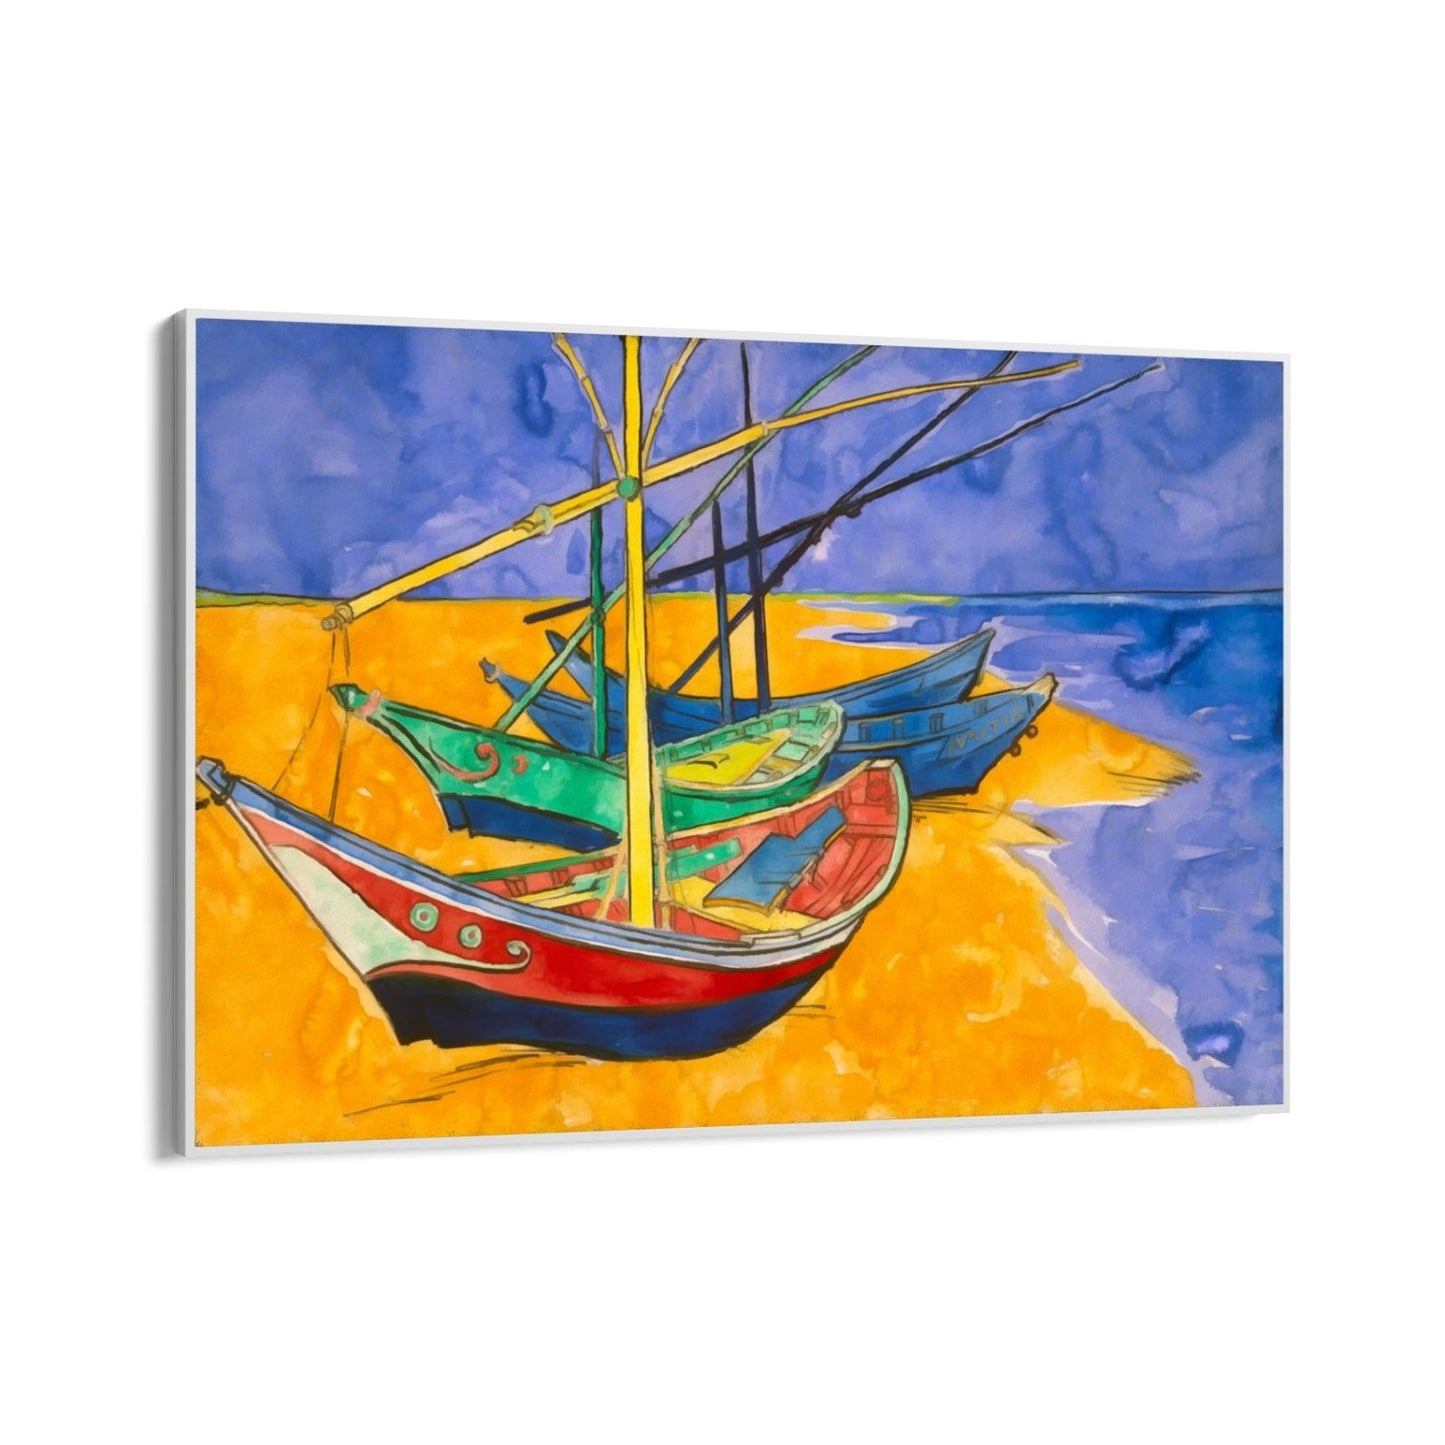 Kalastusveneet rannalla I, Vincent Van Gogh